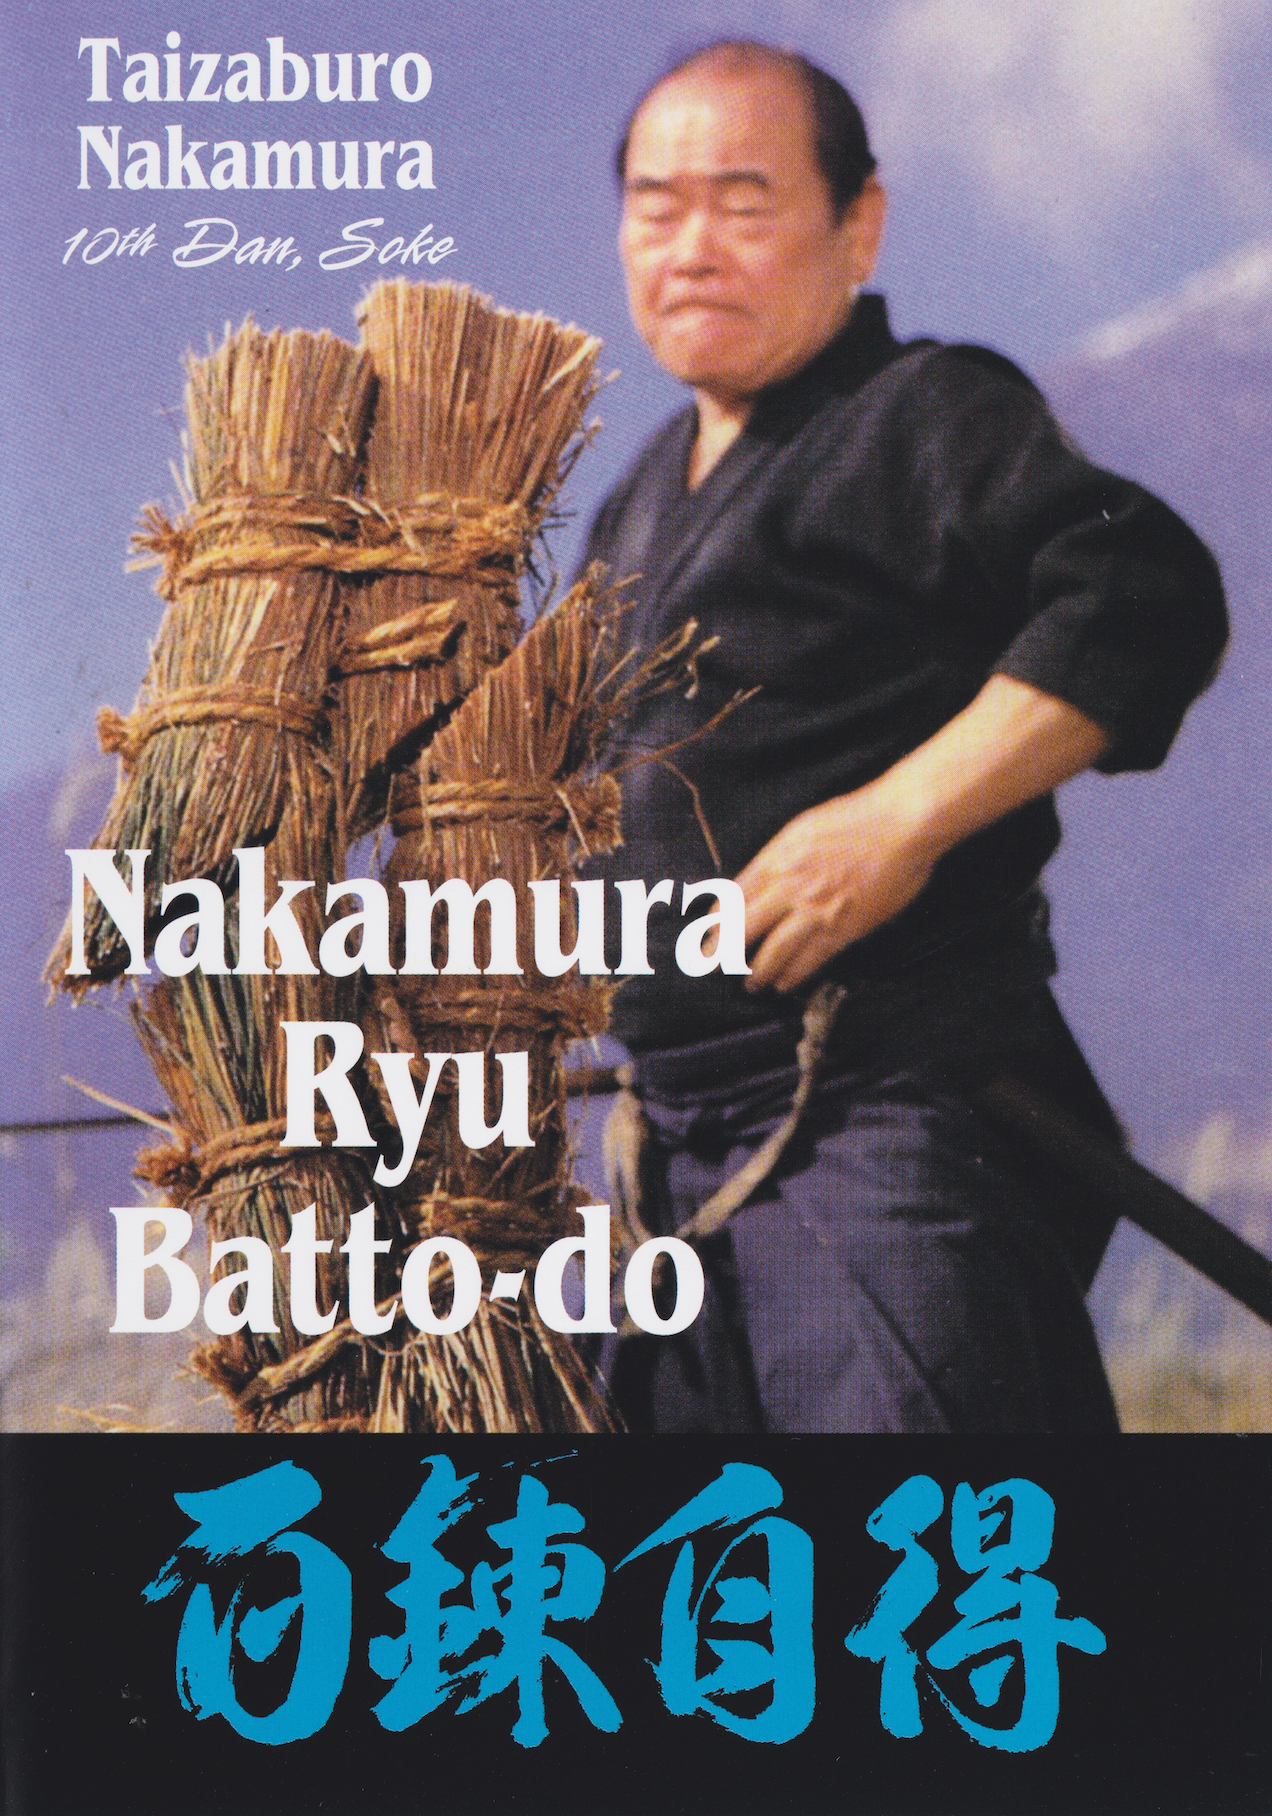 Nakamura Ryu Batto Jutsu DVD with Taizaburo Nakamura - Budovideos Inc